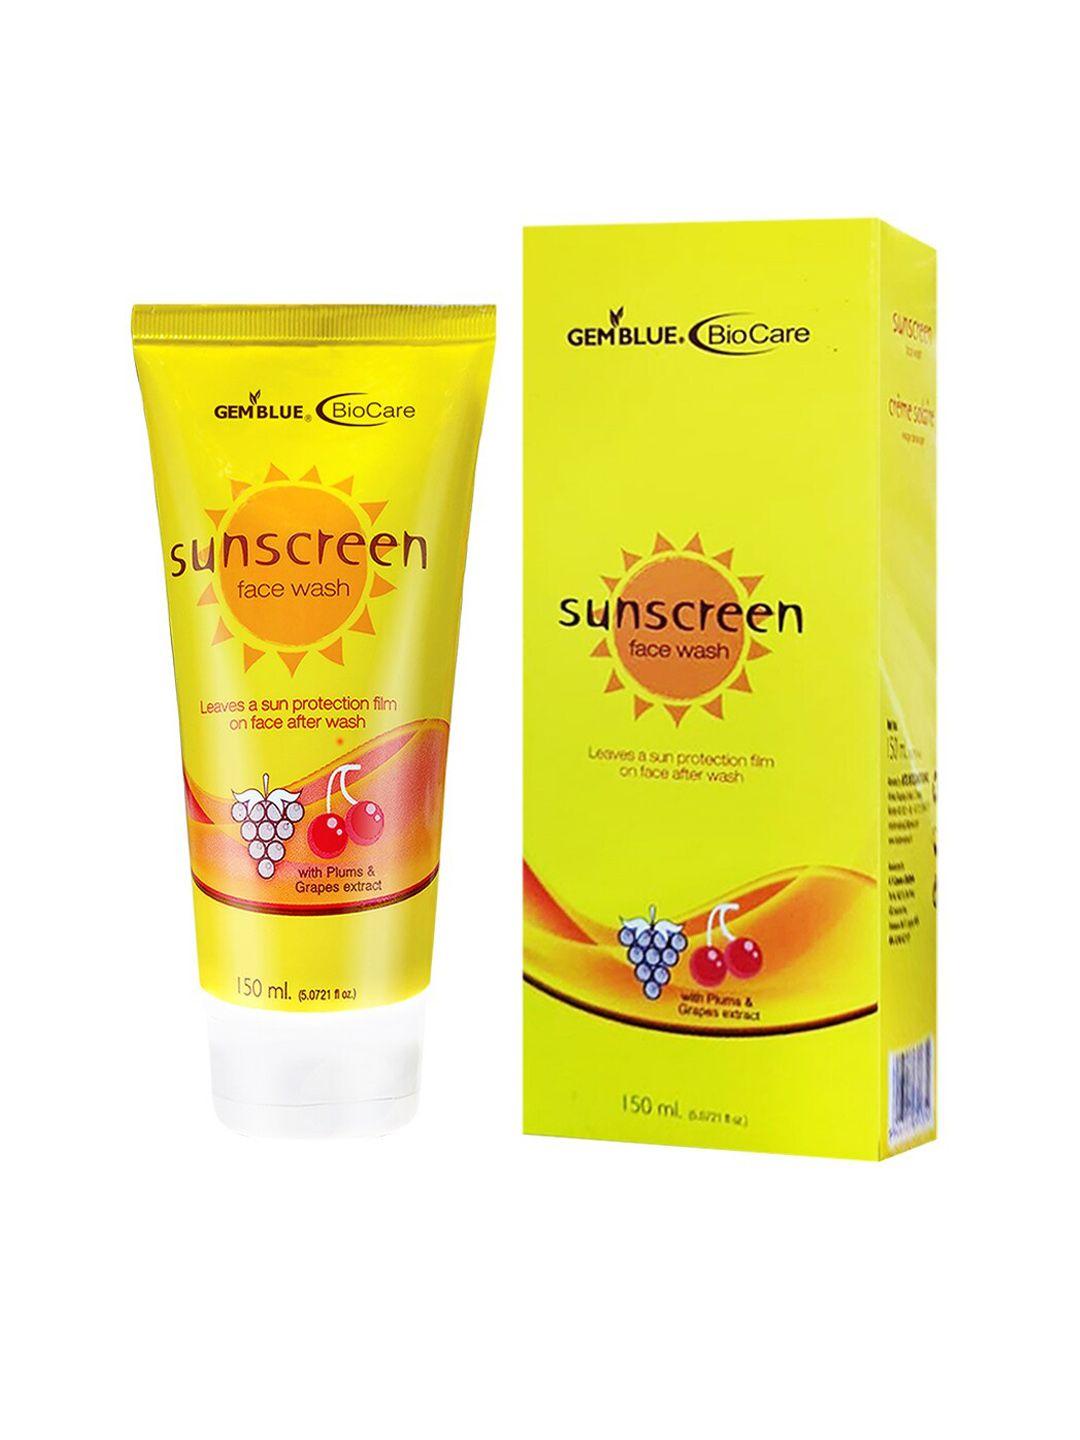 gemblue biocare sunscreen face wash - 150 ml